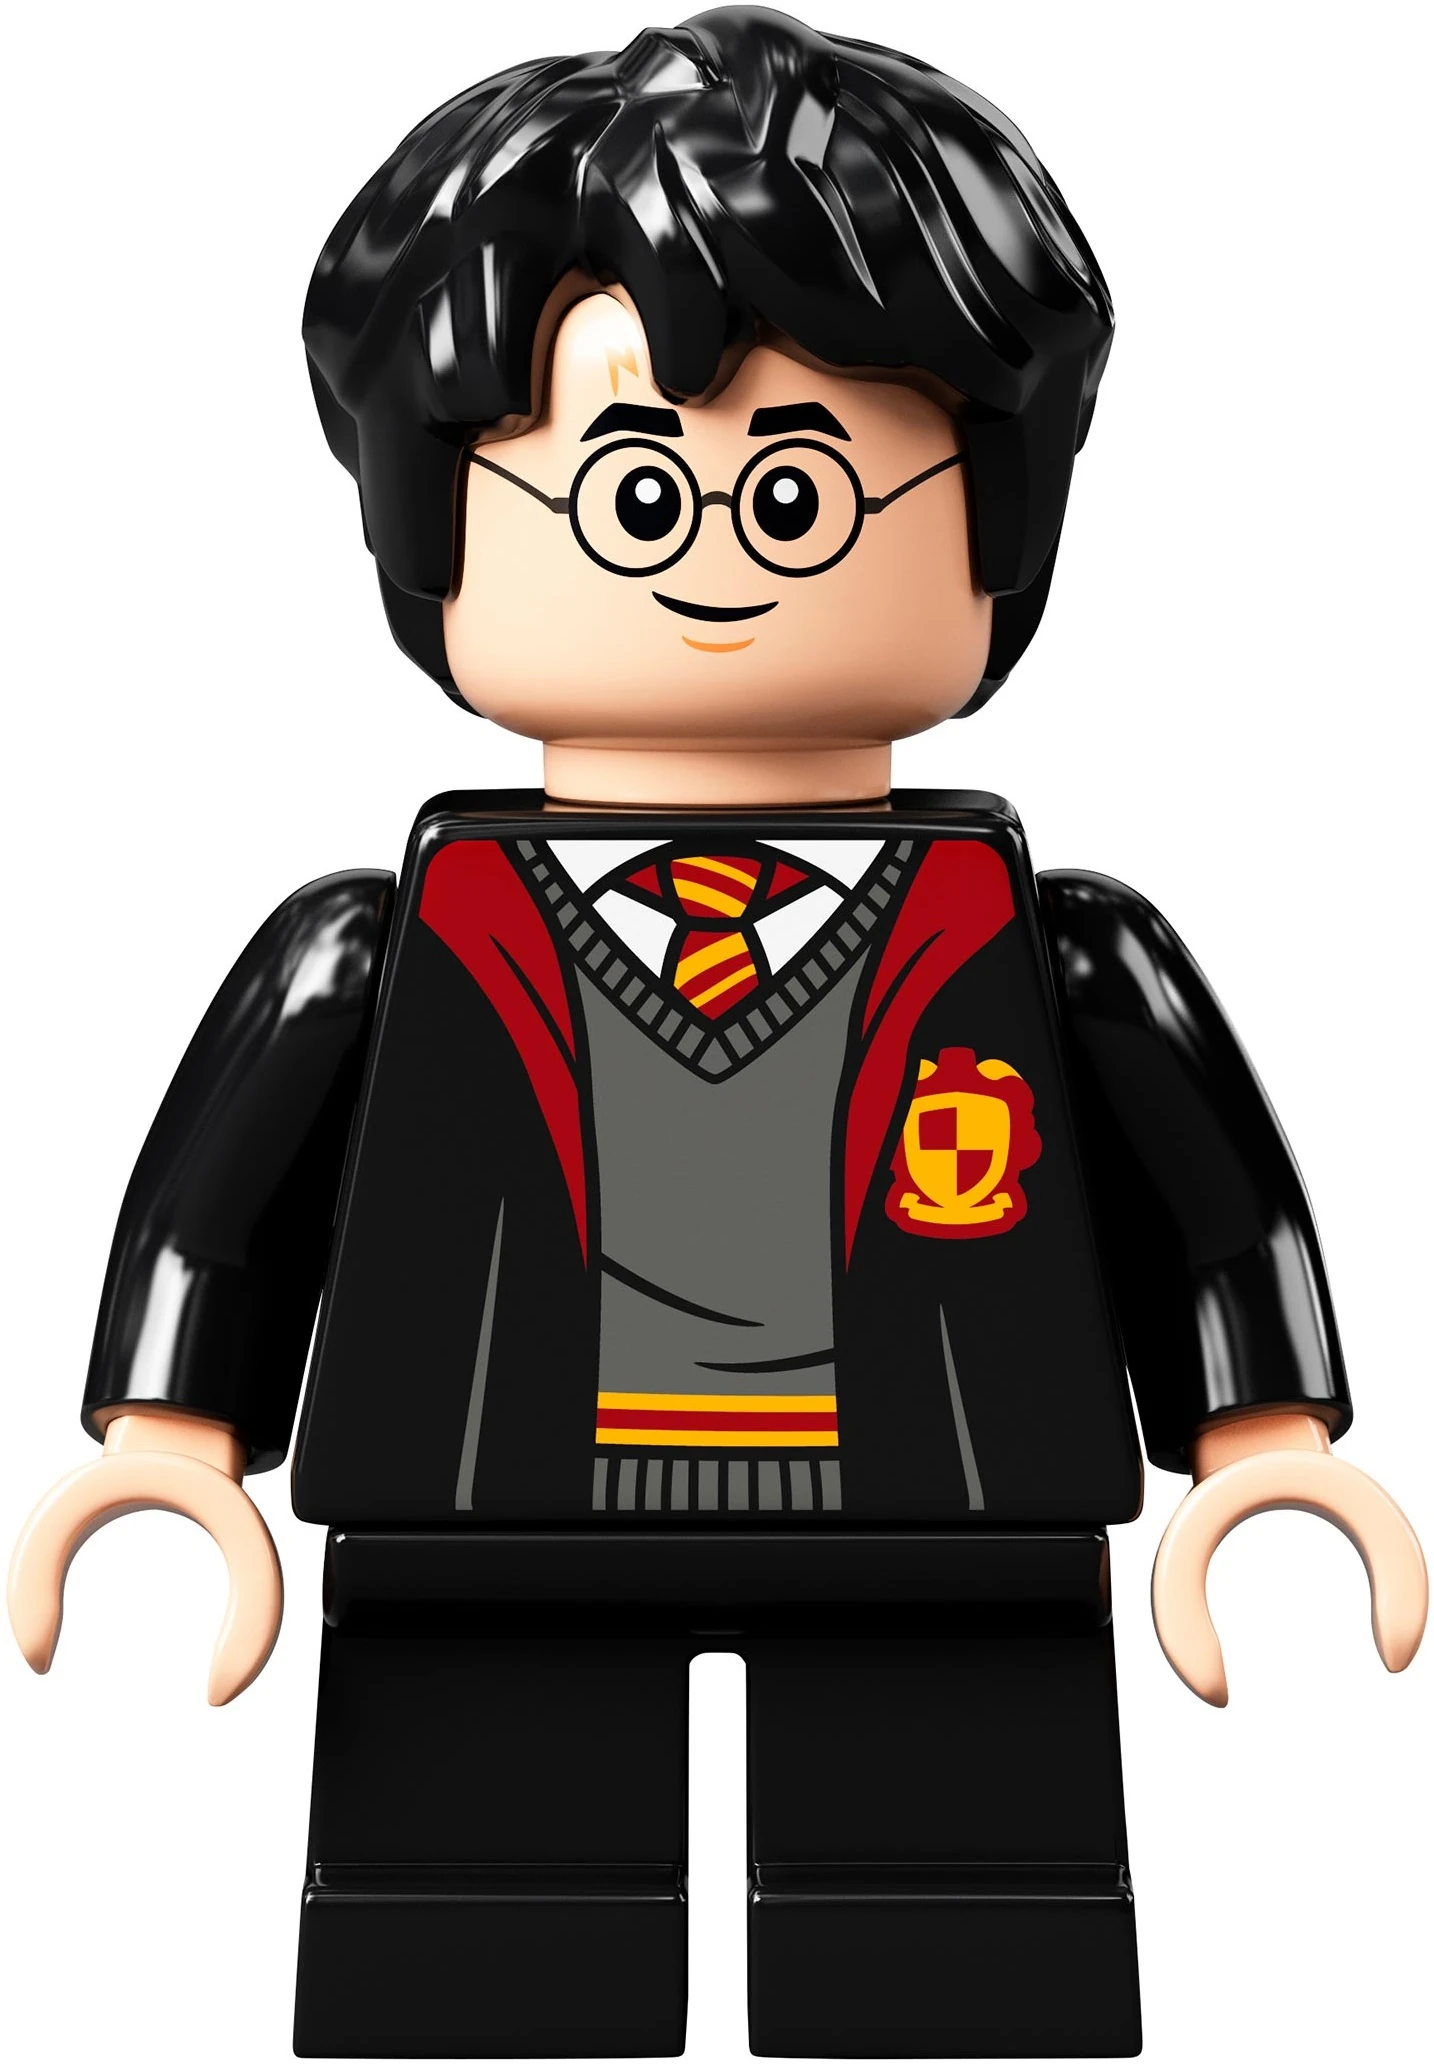 Harry Potter (Minifigure), Brickipedia